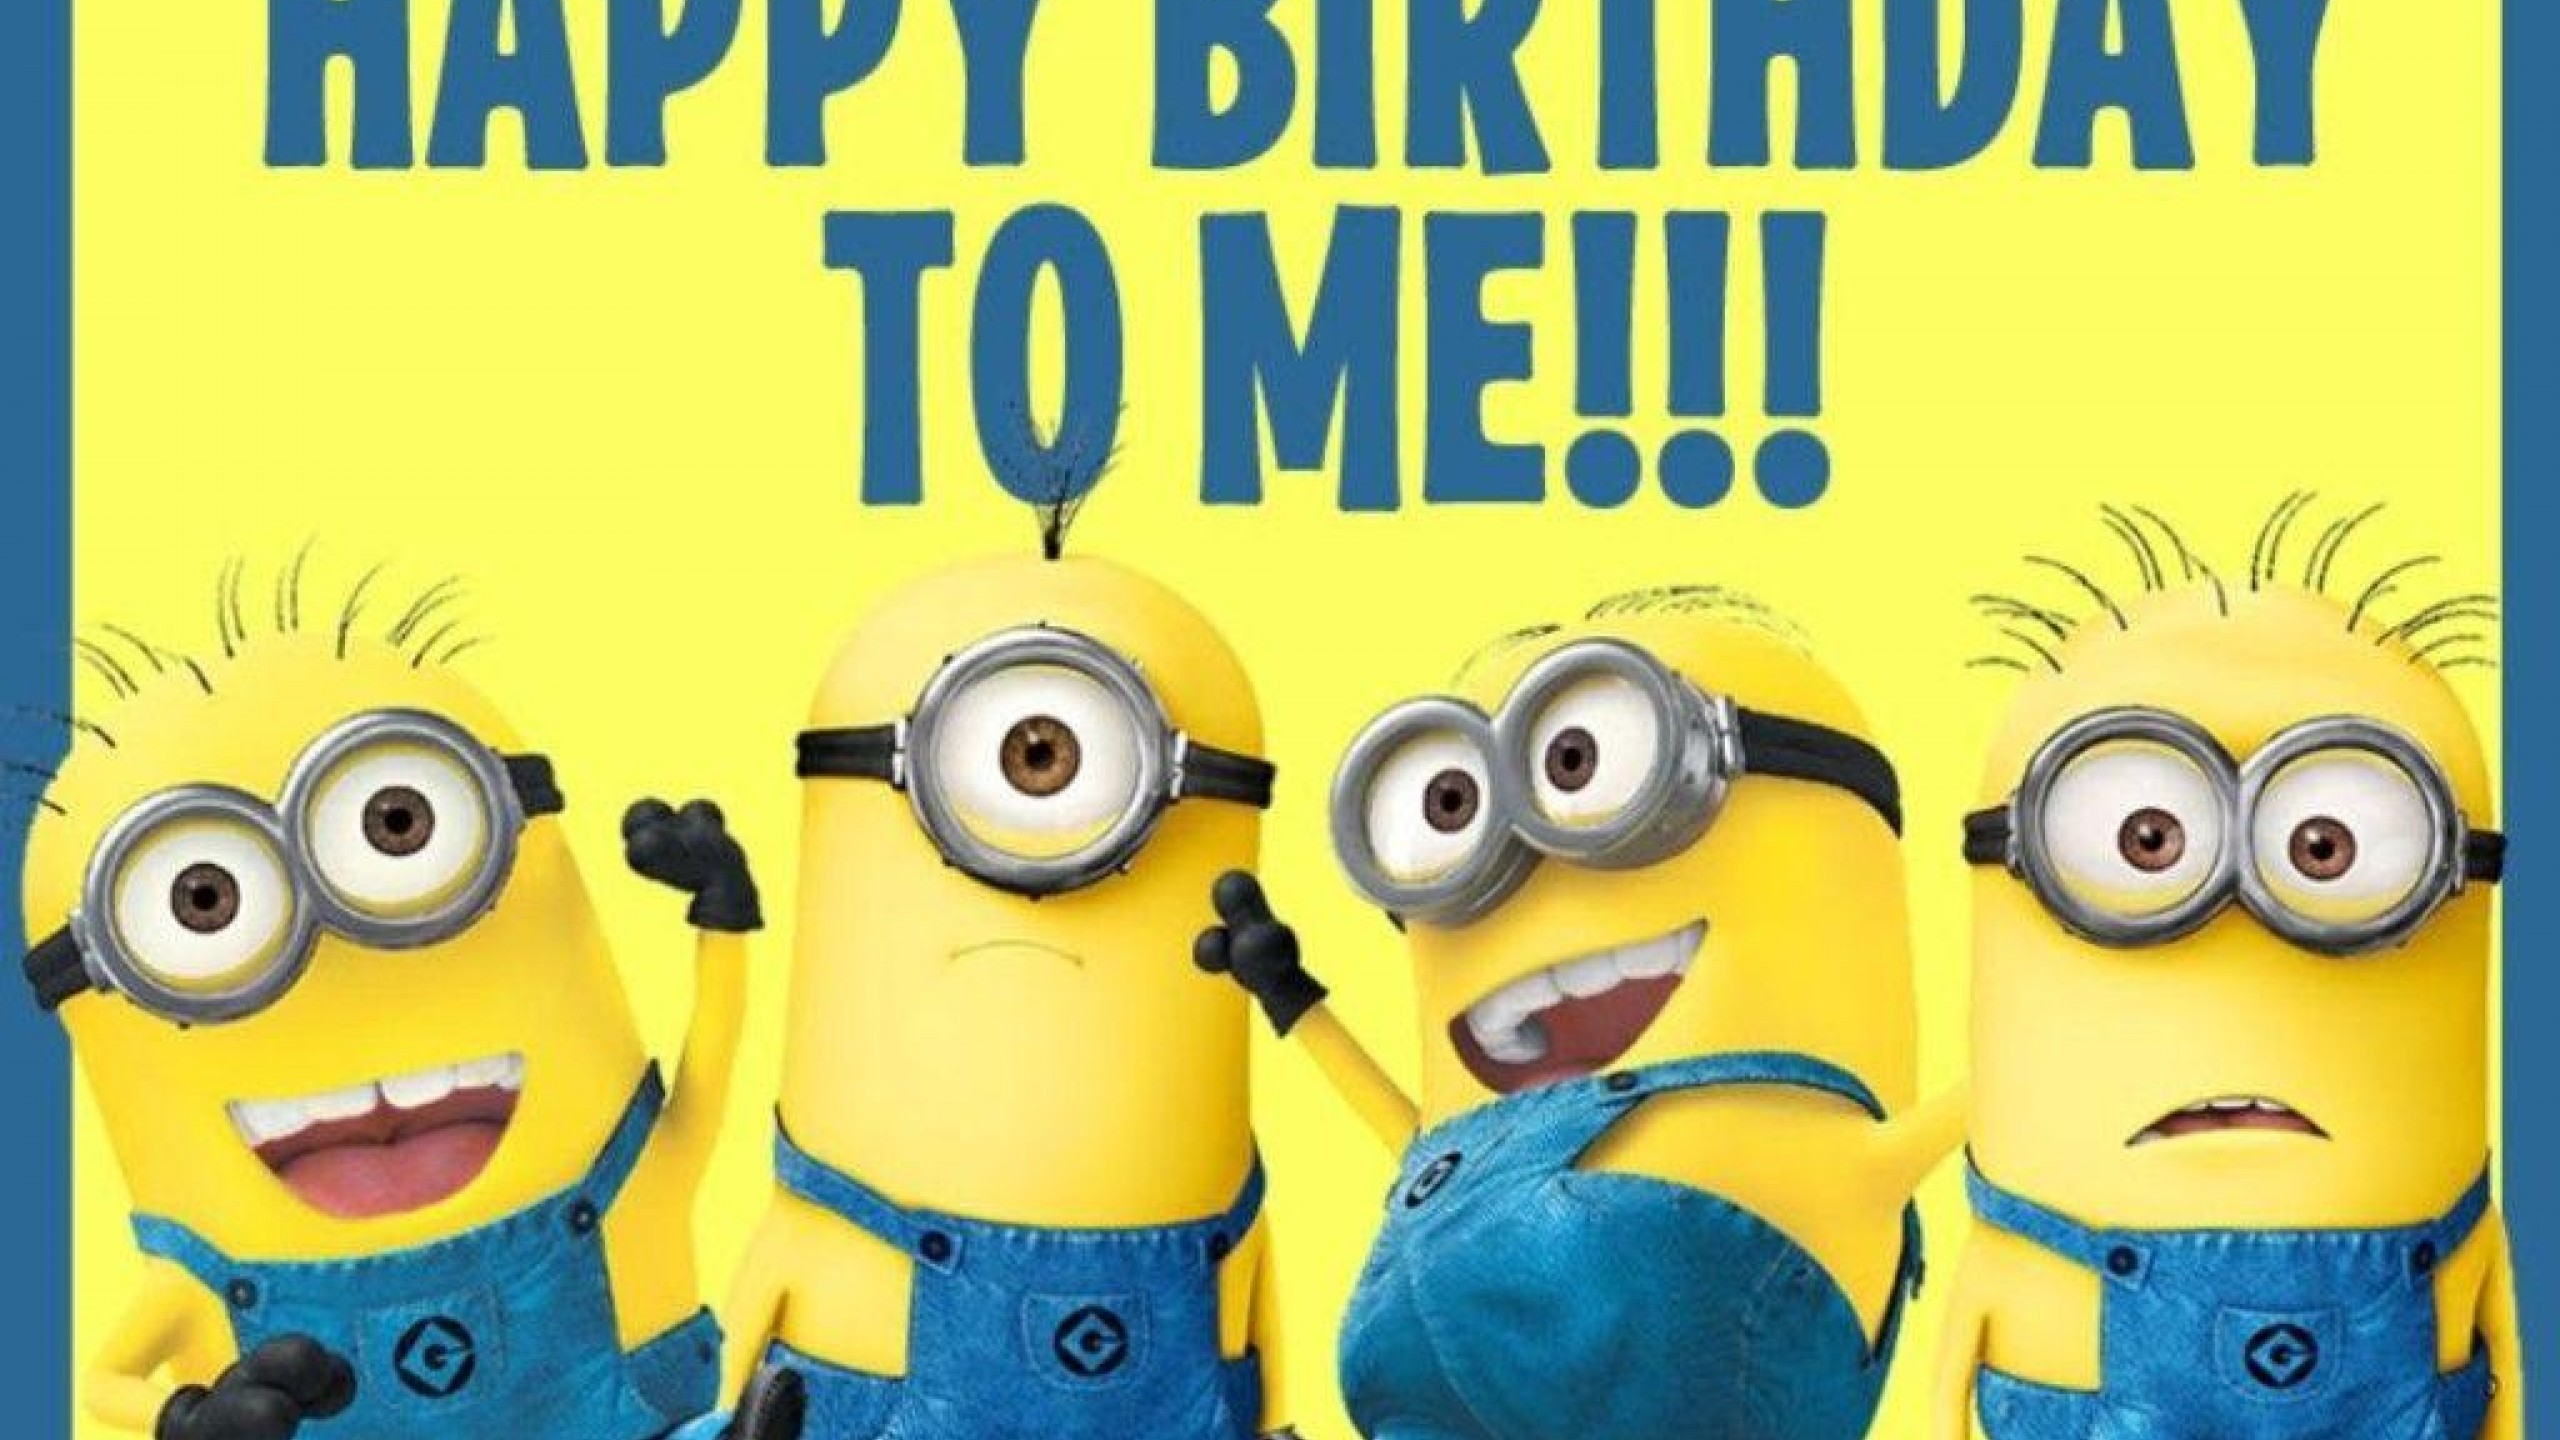 Instagram Happy Birthday To Me - HD Wallpaper 